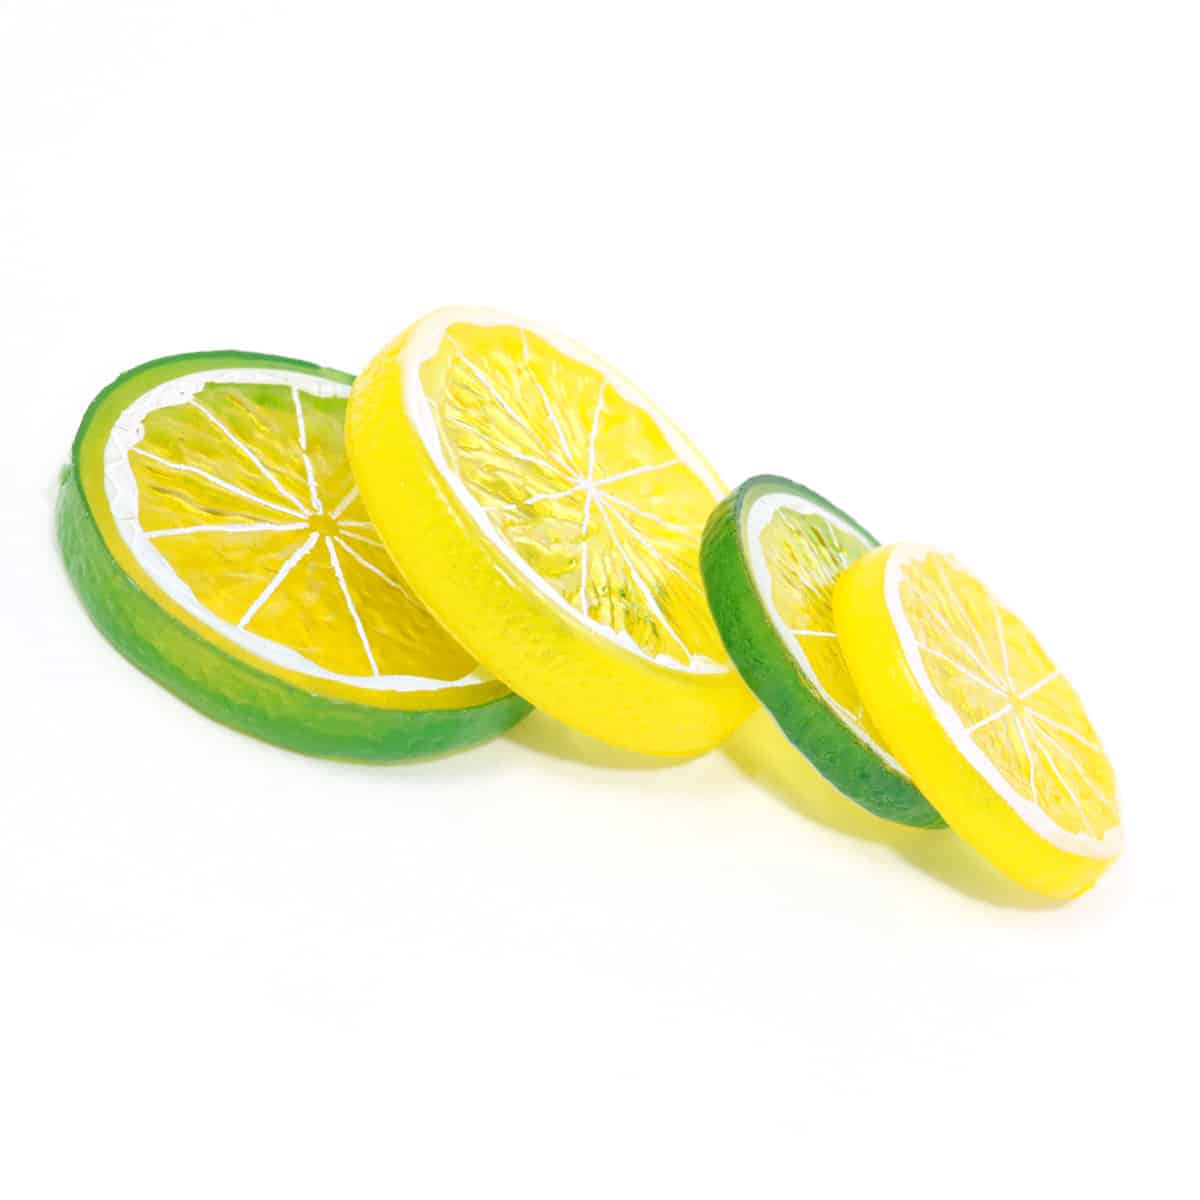 Lemon and lime slices epoxy sprinkles